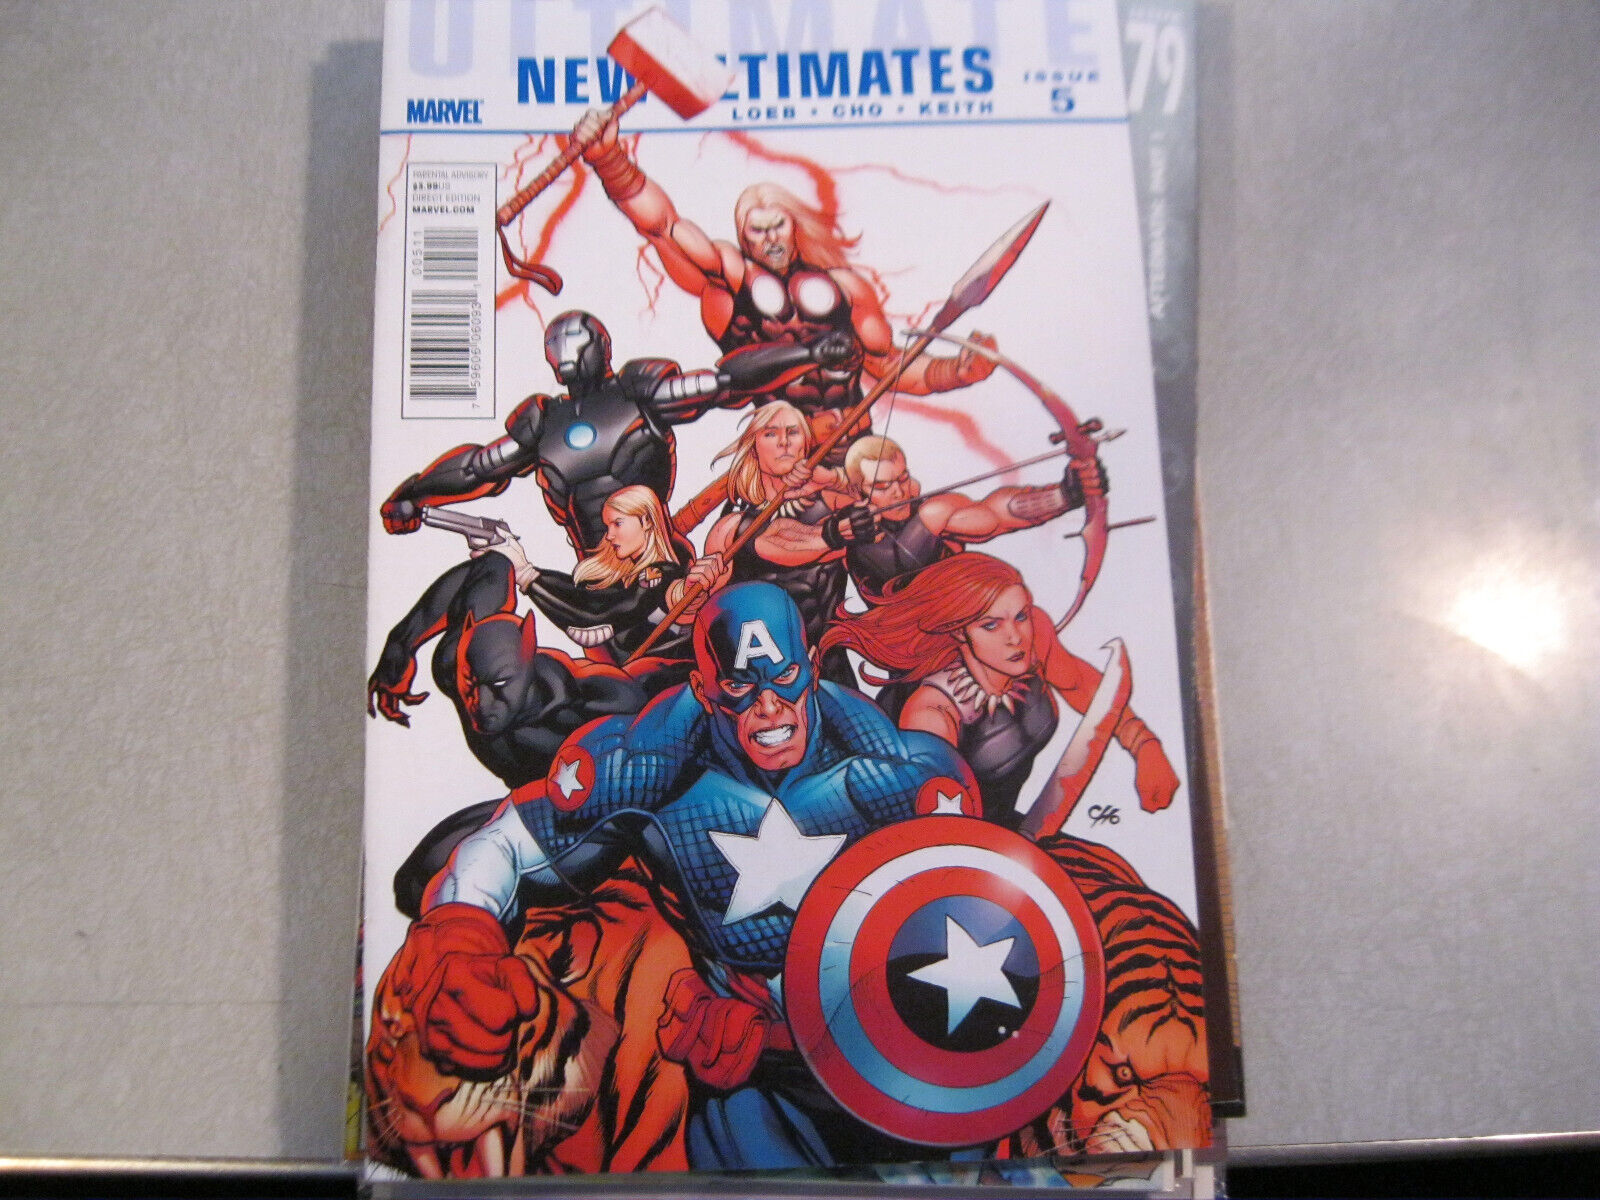 Ultimate New Ultimates (2010 Marvel) #5 written by jeph loeb & art by frank cho